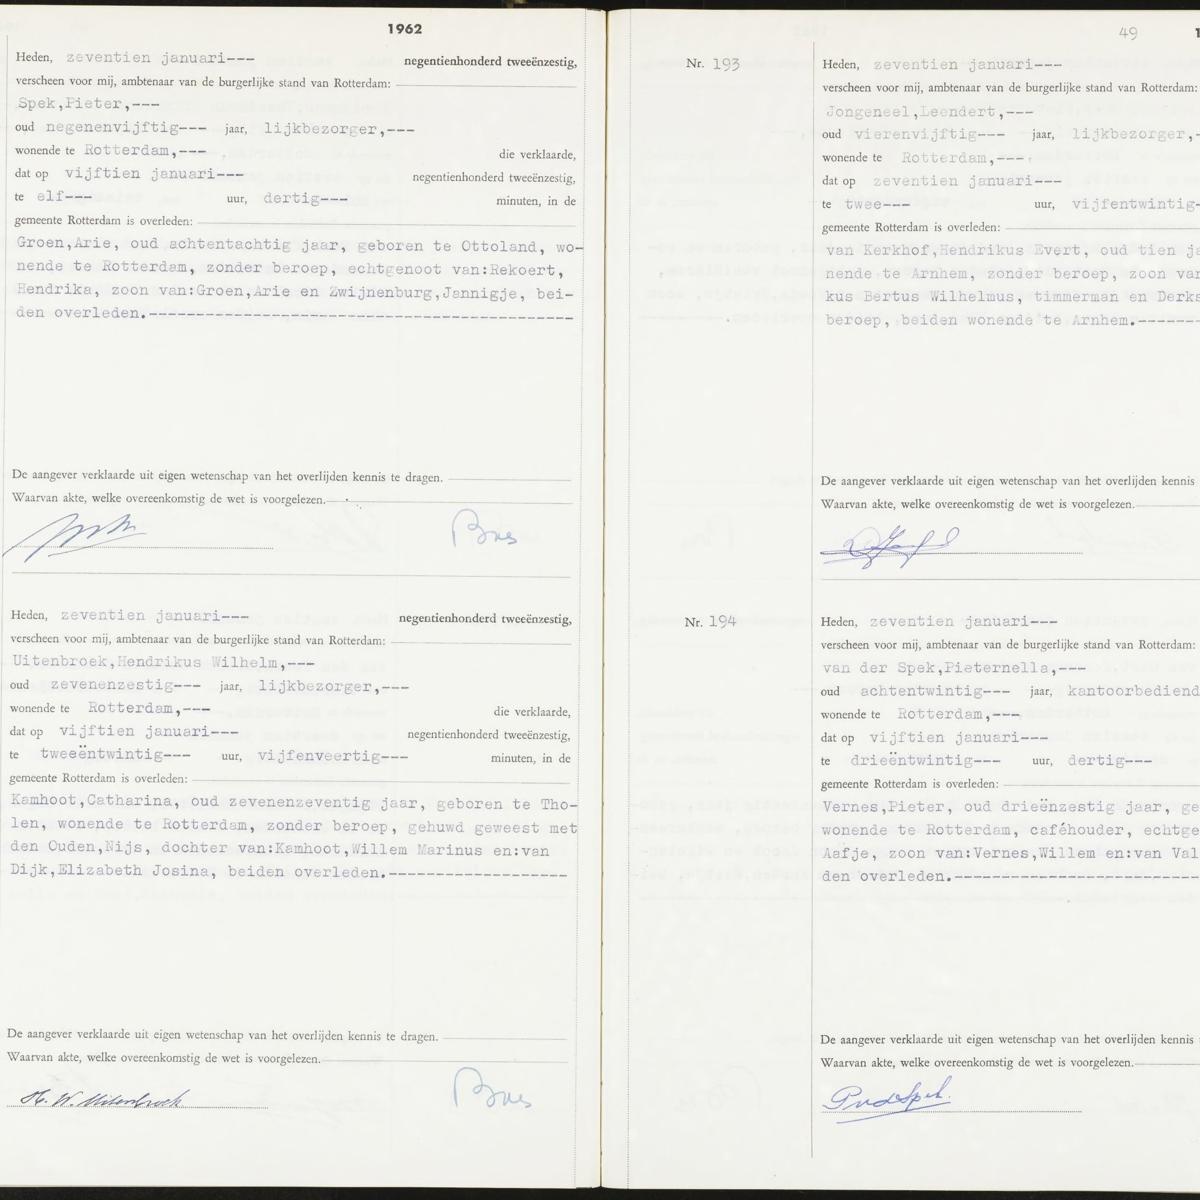 Civil registry of deaths, Rotterdam, 1962, records 191-194